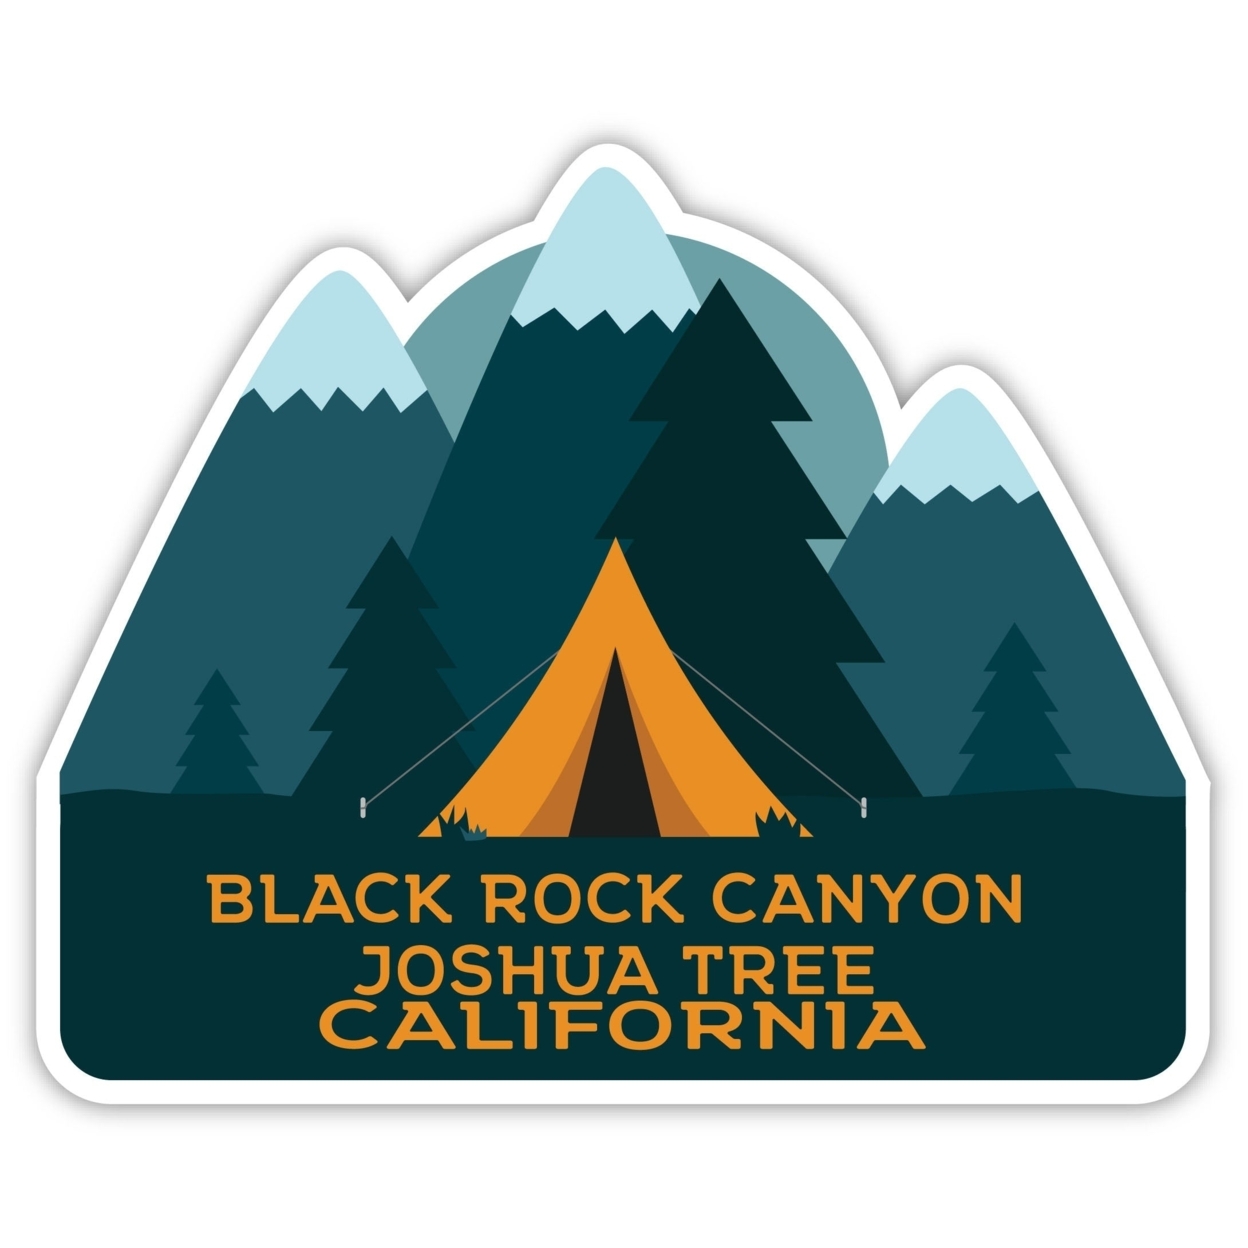 Black Rock Canyon Joshua Tree California Souvenir Decorative Stickers (Choose Theme And Size) - Single Unit, 6-Inch, Bear